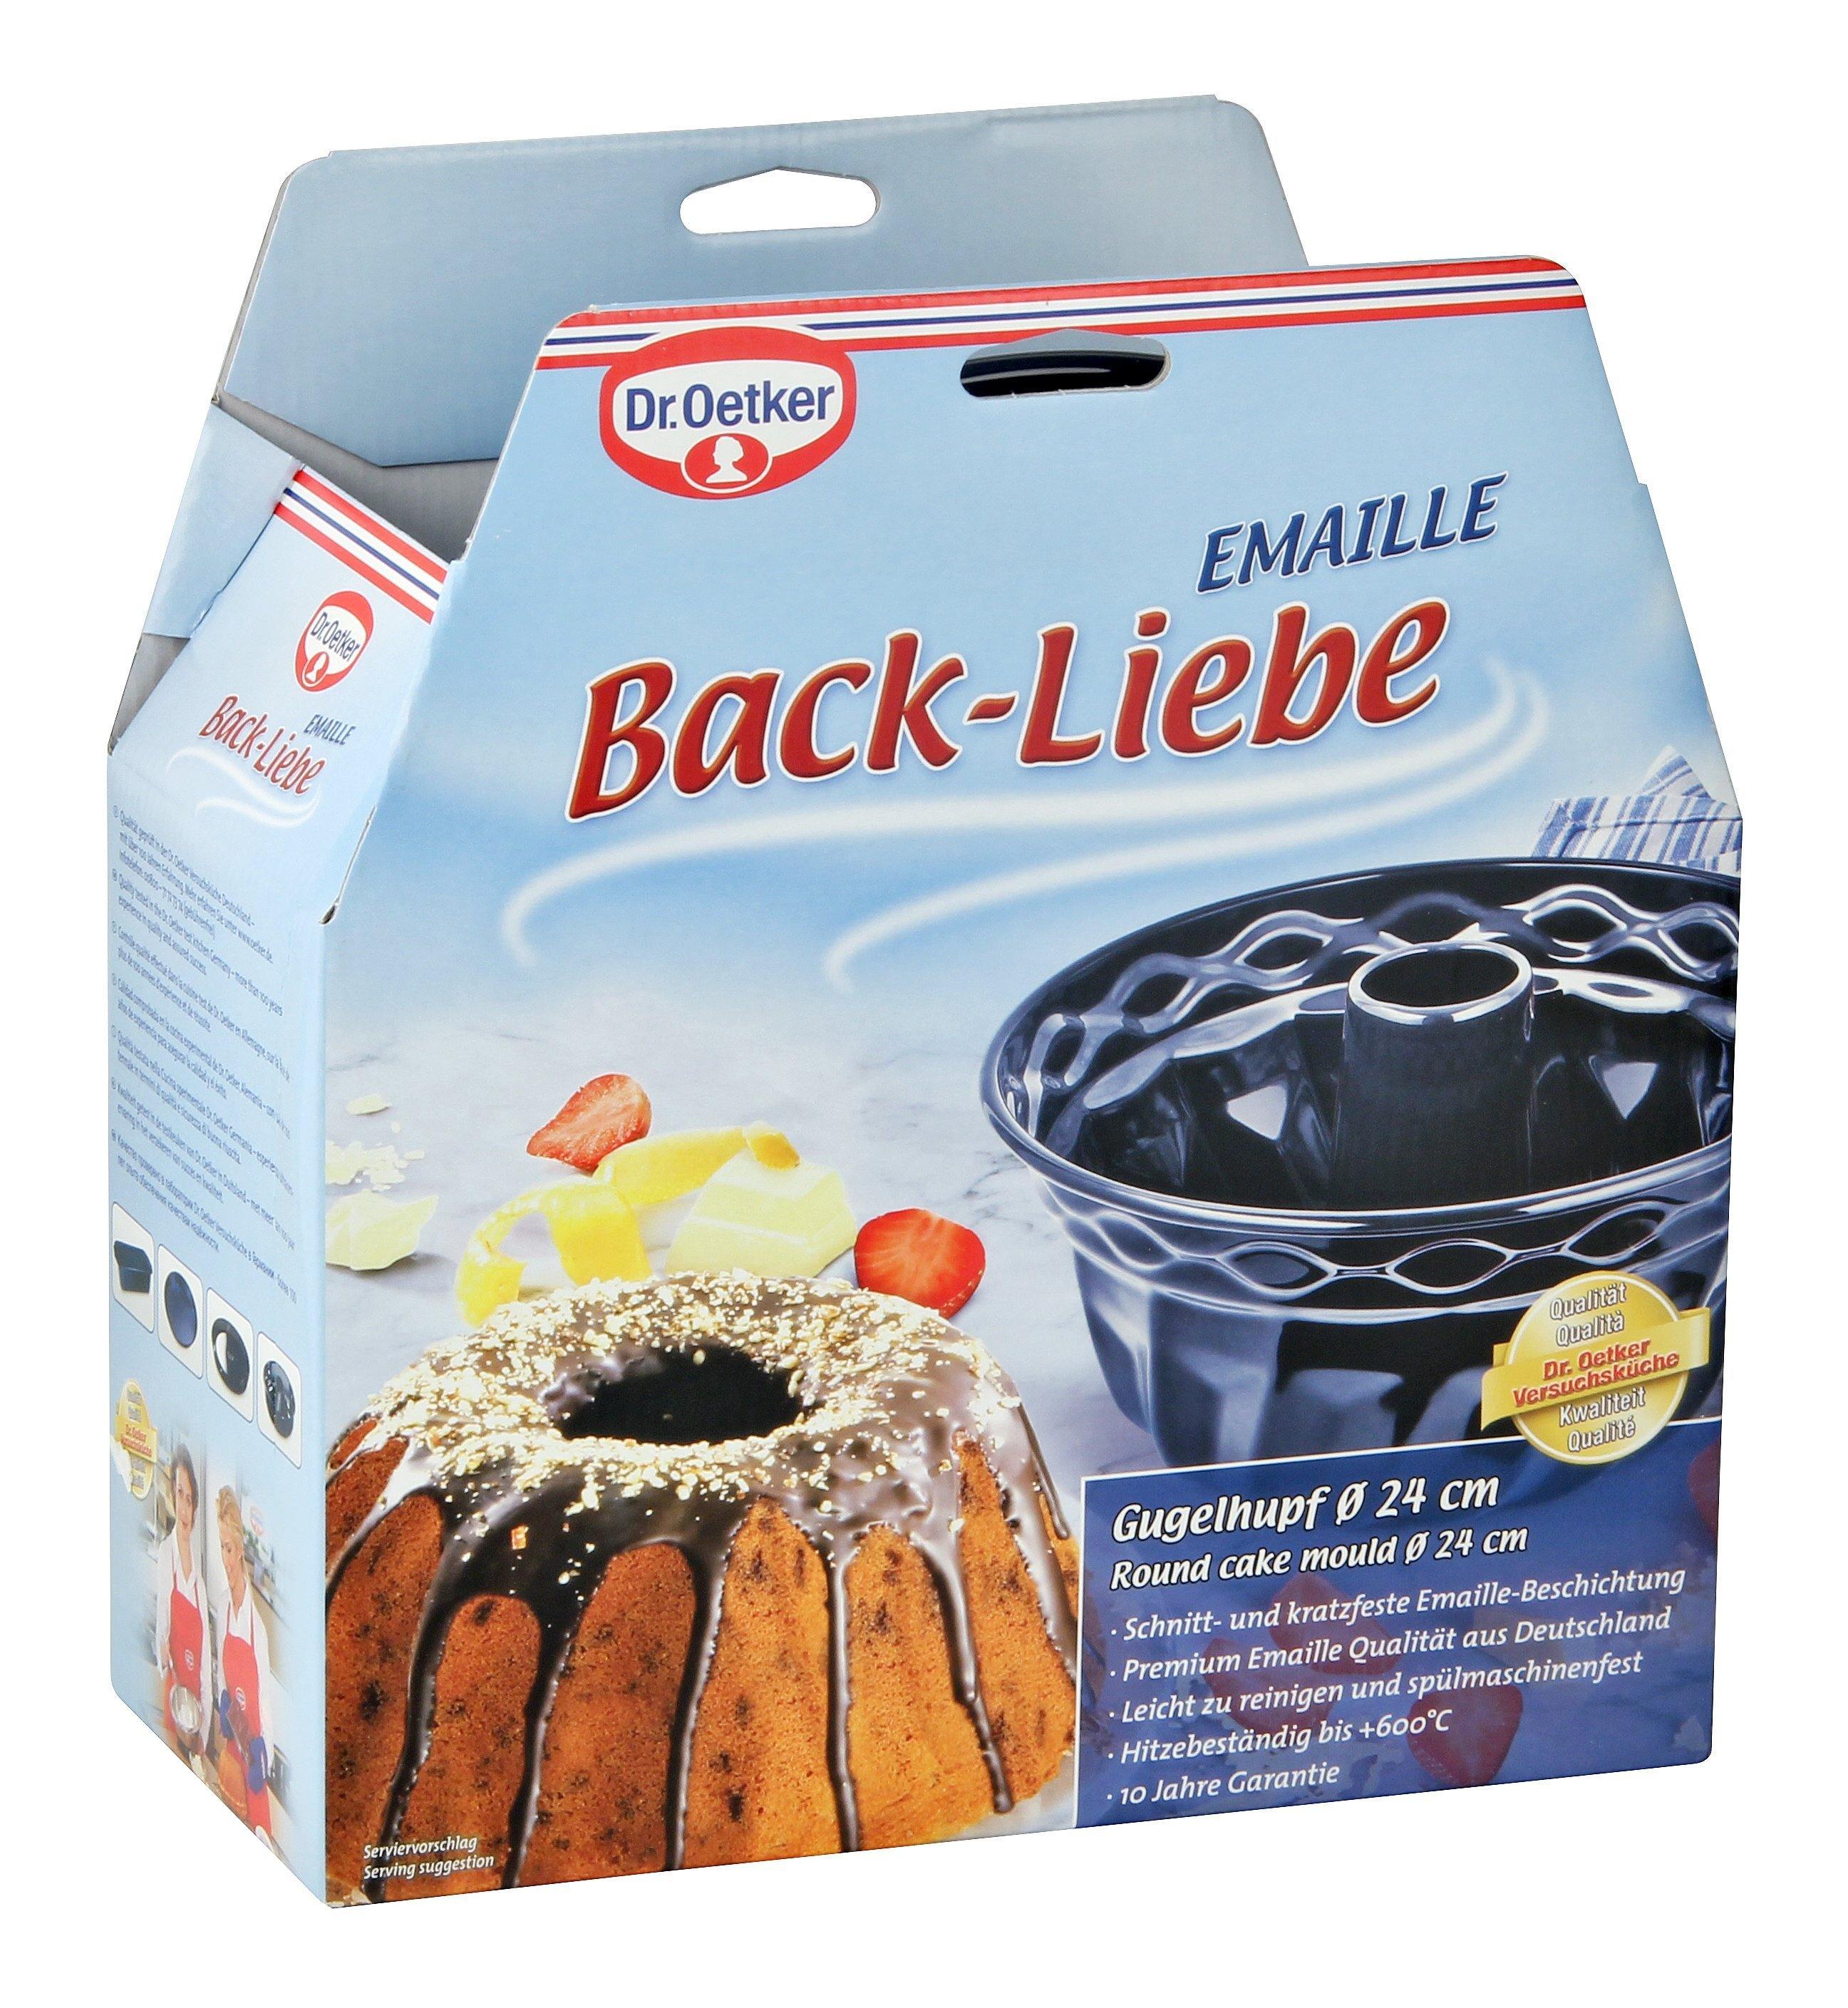 Dr. Oetker "Back-Liebe Emaille" Bundt Cake Mould, Blue, 24X12 Cm - Whole and All